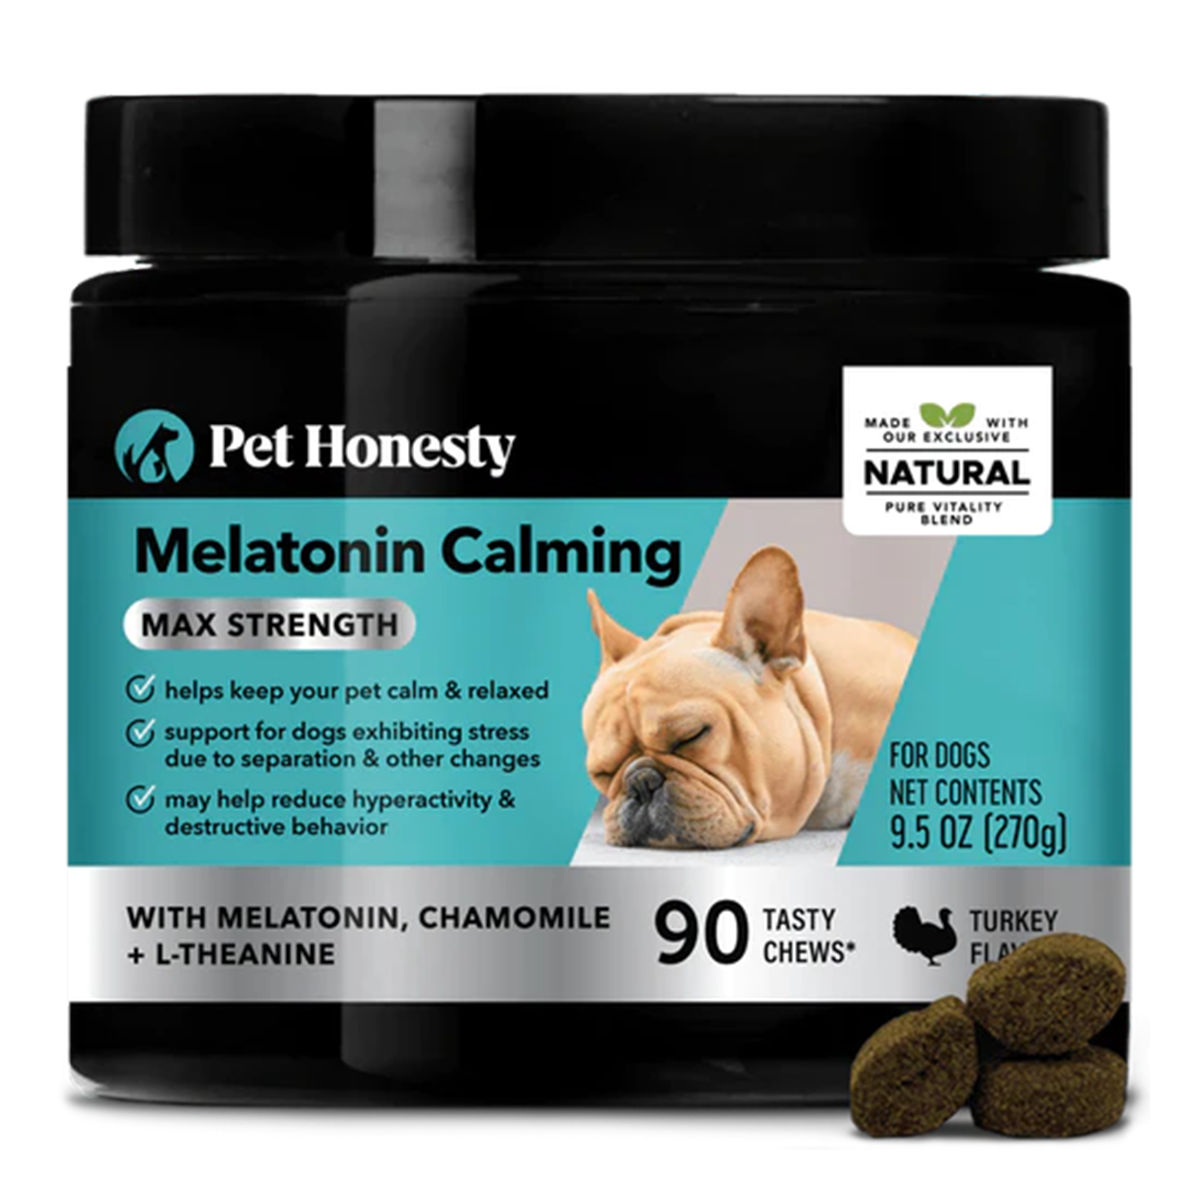 Pet Honesty Melatonin Calming Max Strength Dog Chew Supplement - Turkey